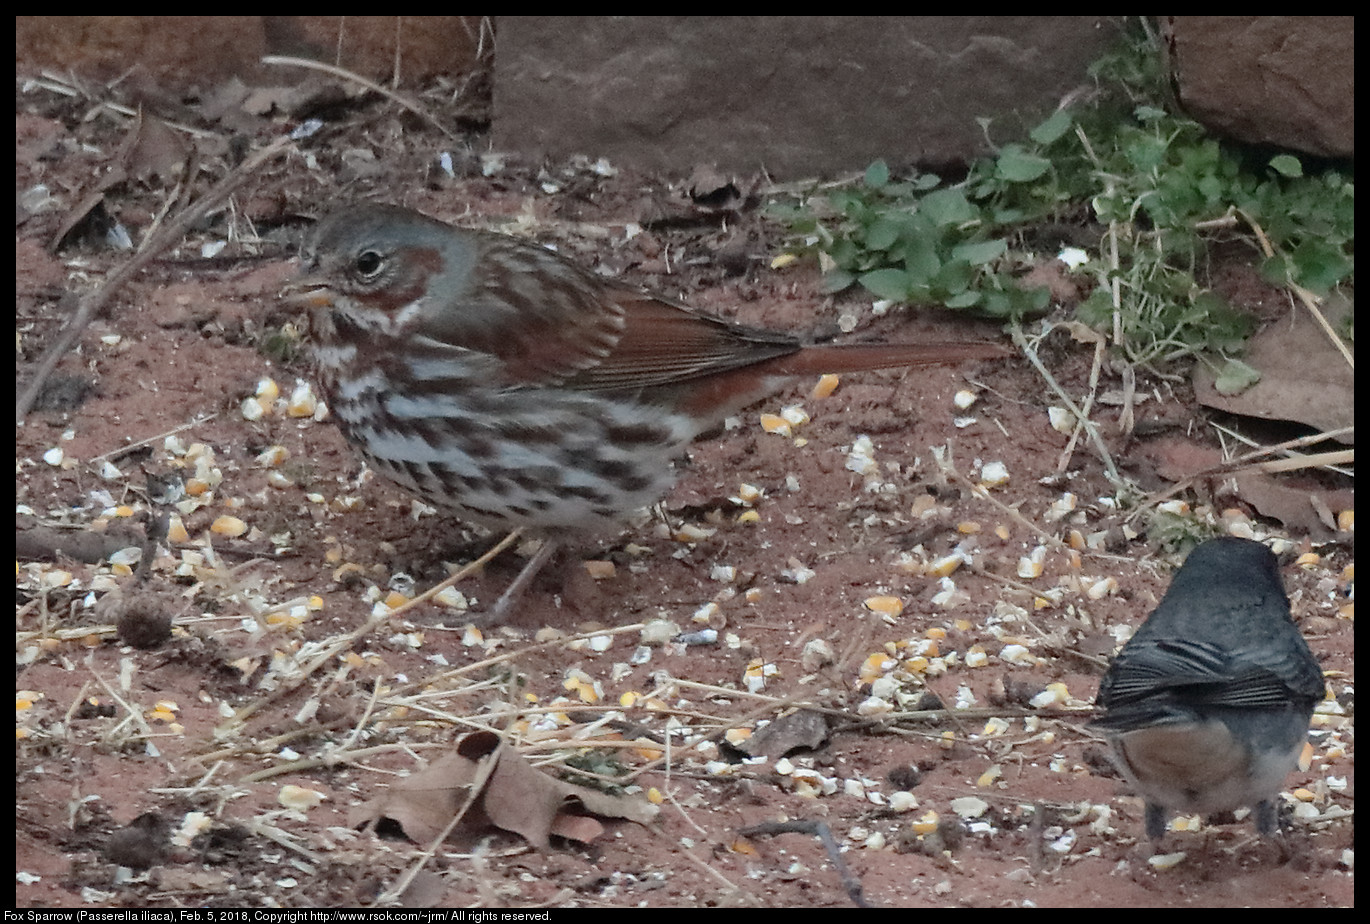 Fox Sparrow (Passerella iliaca), Feb. 5, 2018